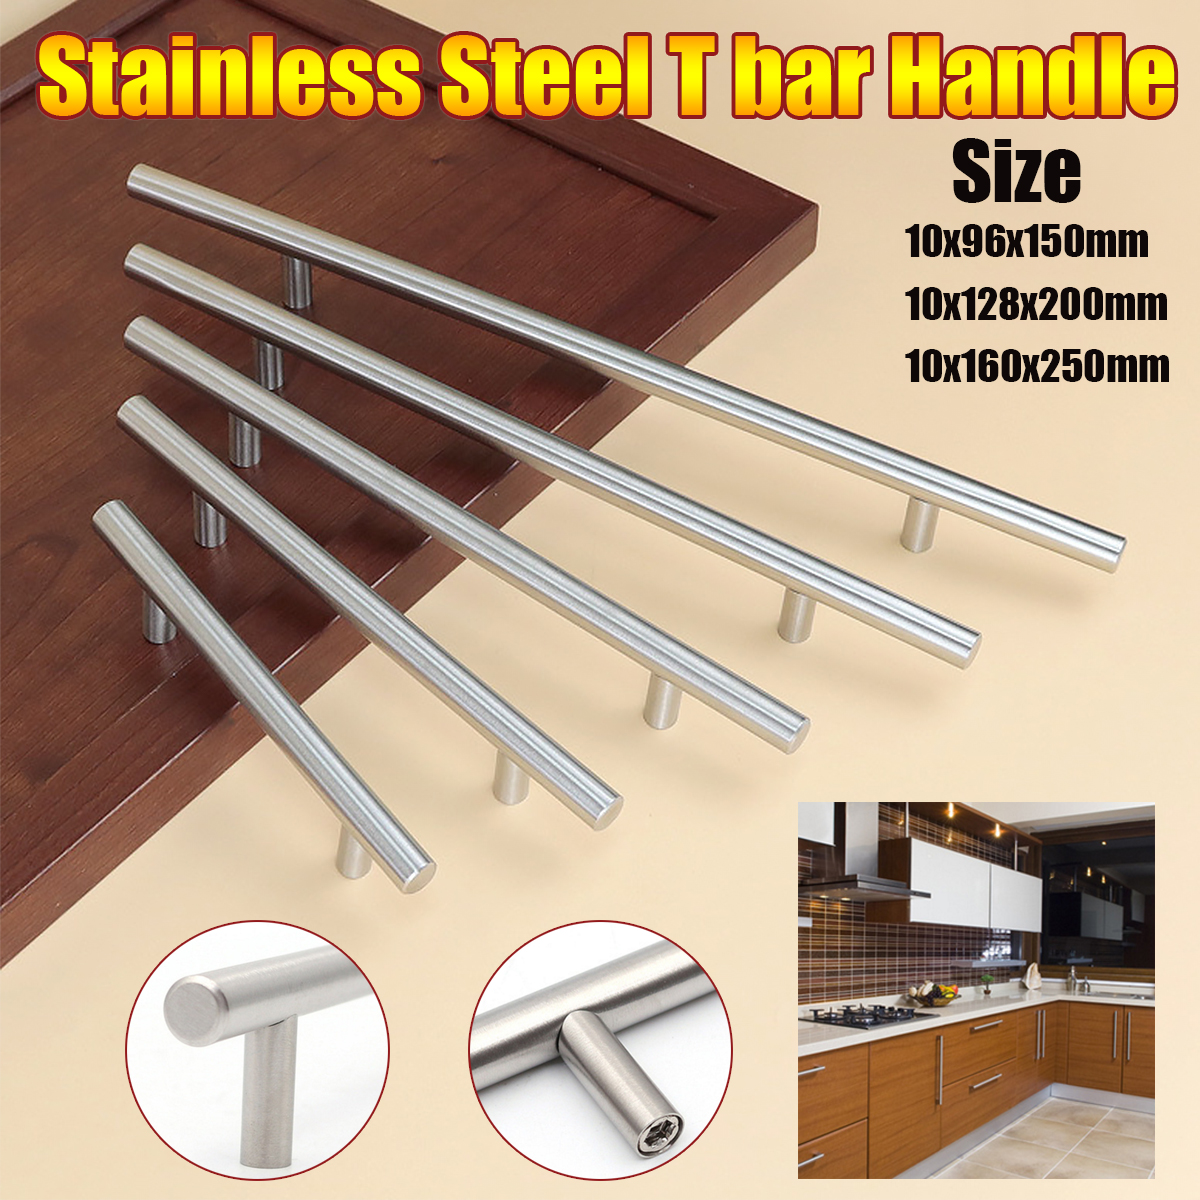 10mm-Stainless-Steel-T-Bar-Handles-for-Kitchen-Door-Furniture-Cupboard-Cabinet-1647211-1